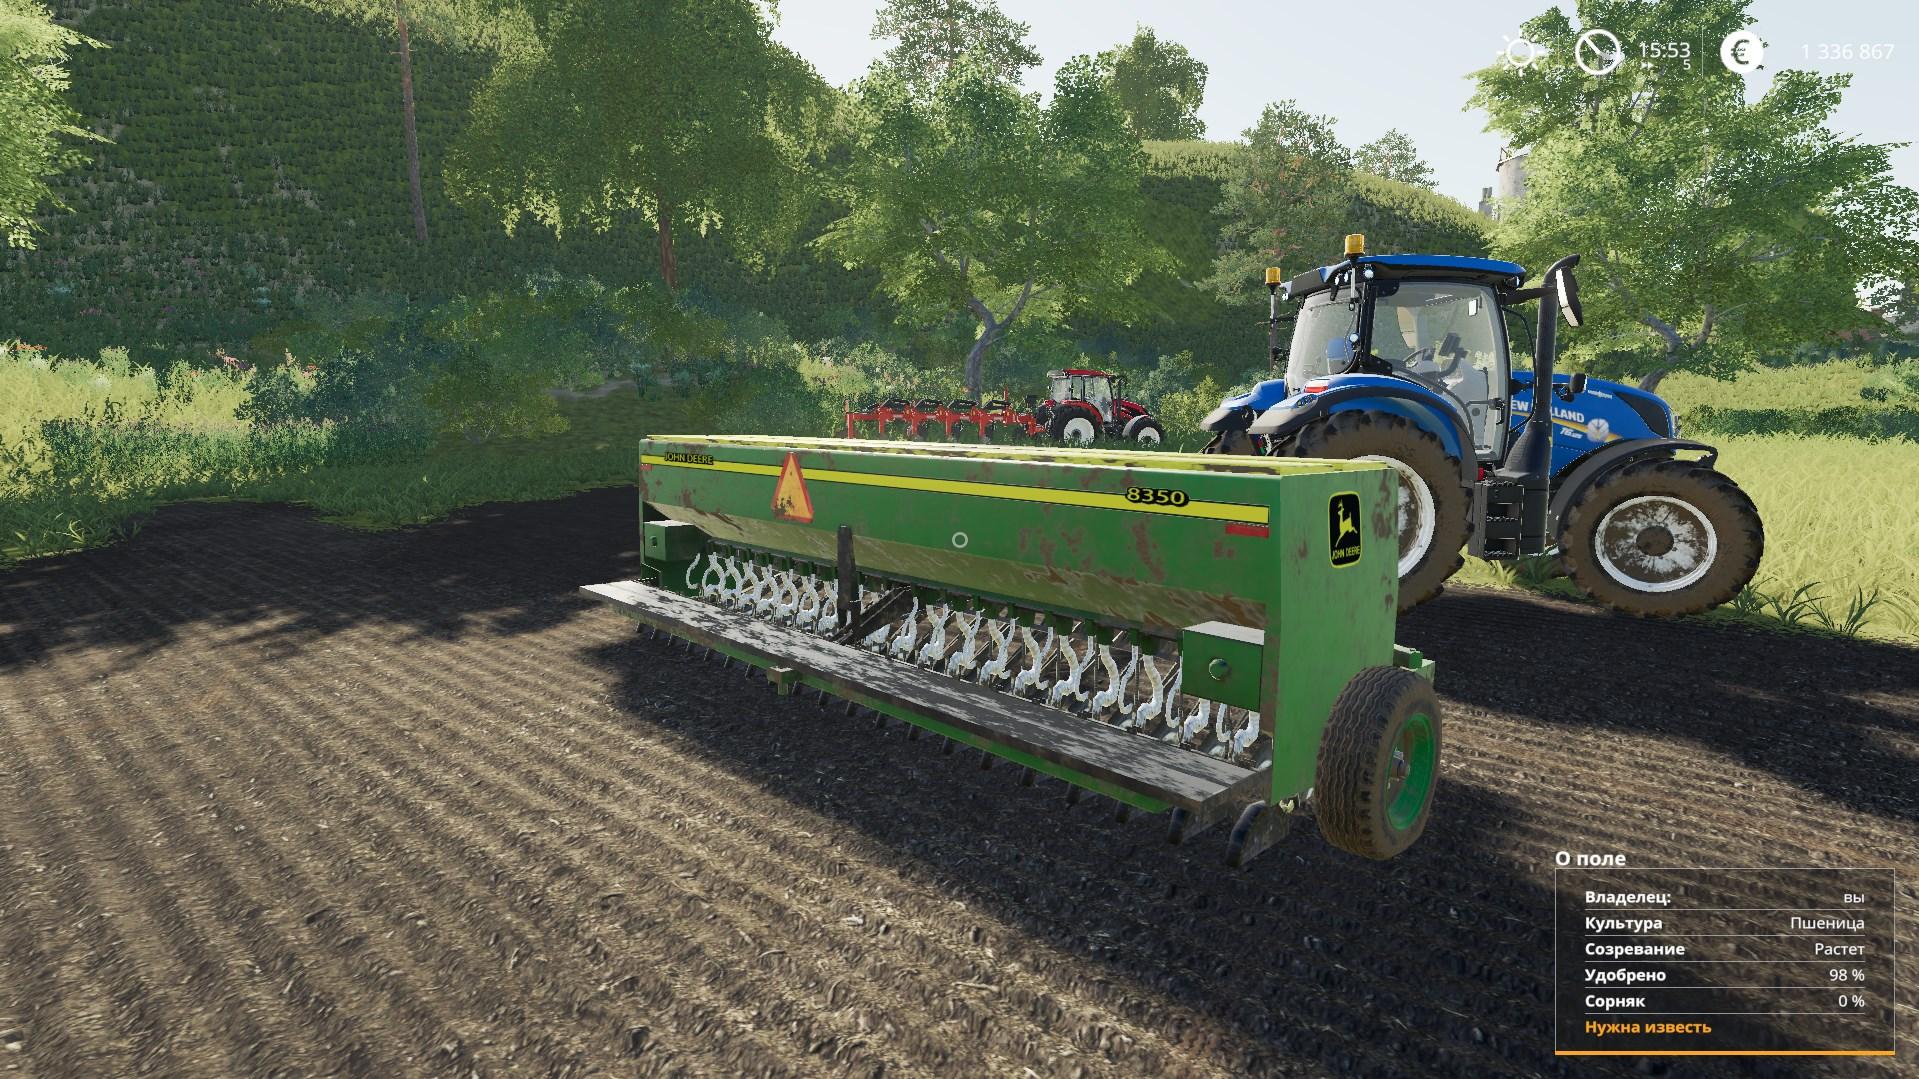 John Deere 8350 v1.0 FS19 | Farming Simulator 19 Mod | FS19 mod.